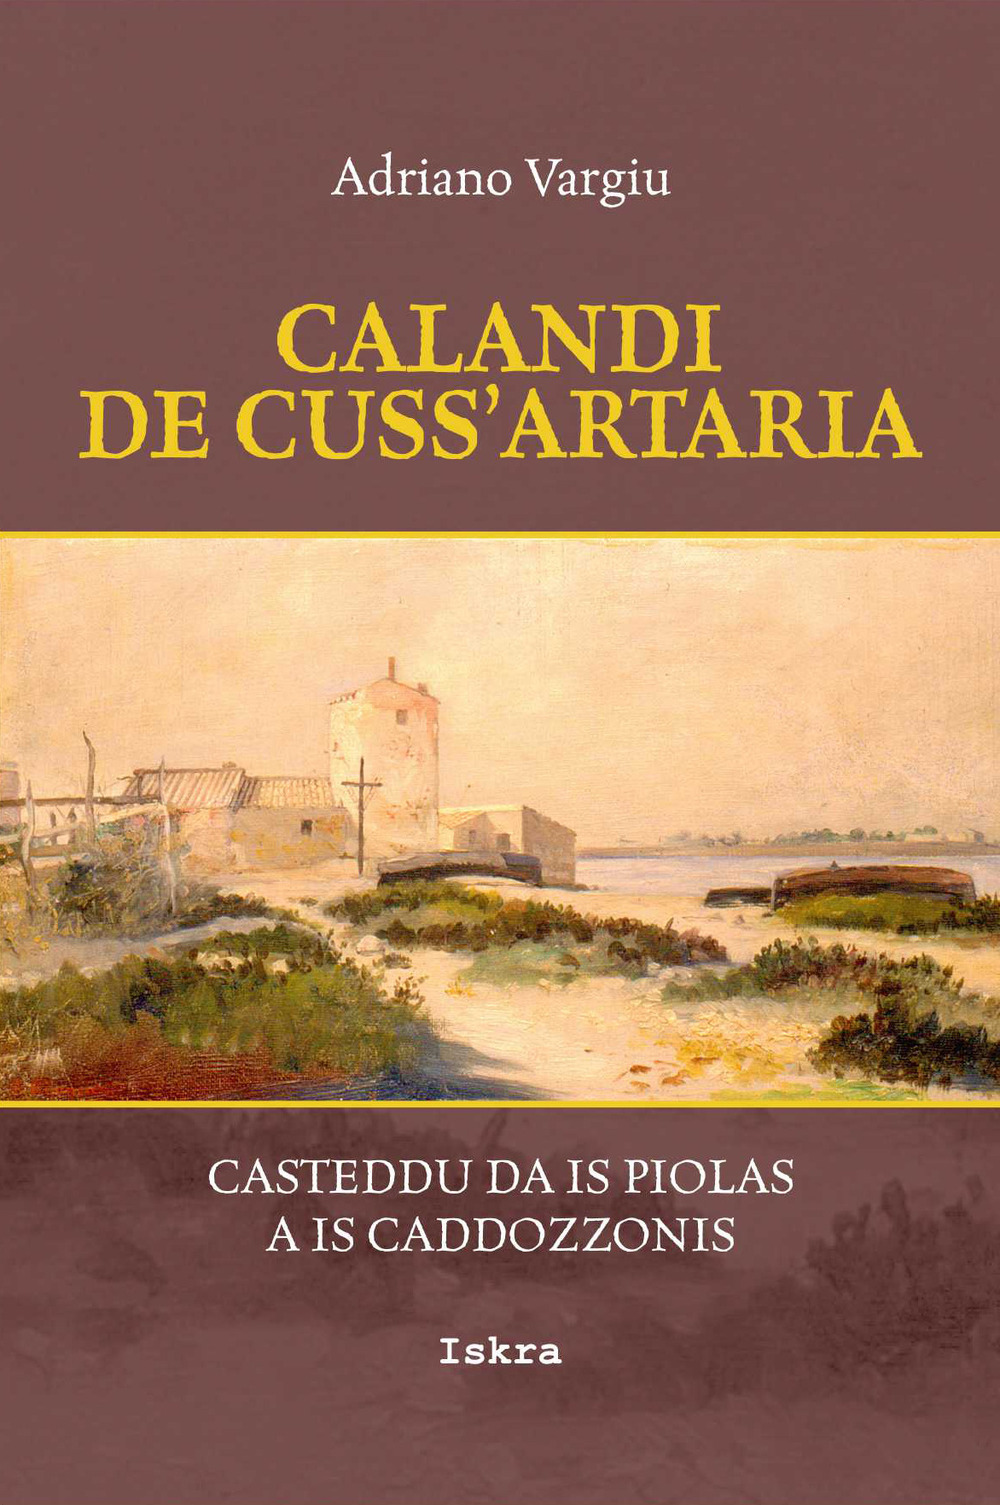 Calandi de cuss'artaria. Casteddu da is piolas a is caddozzonis